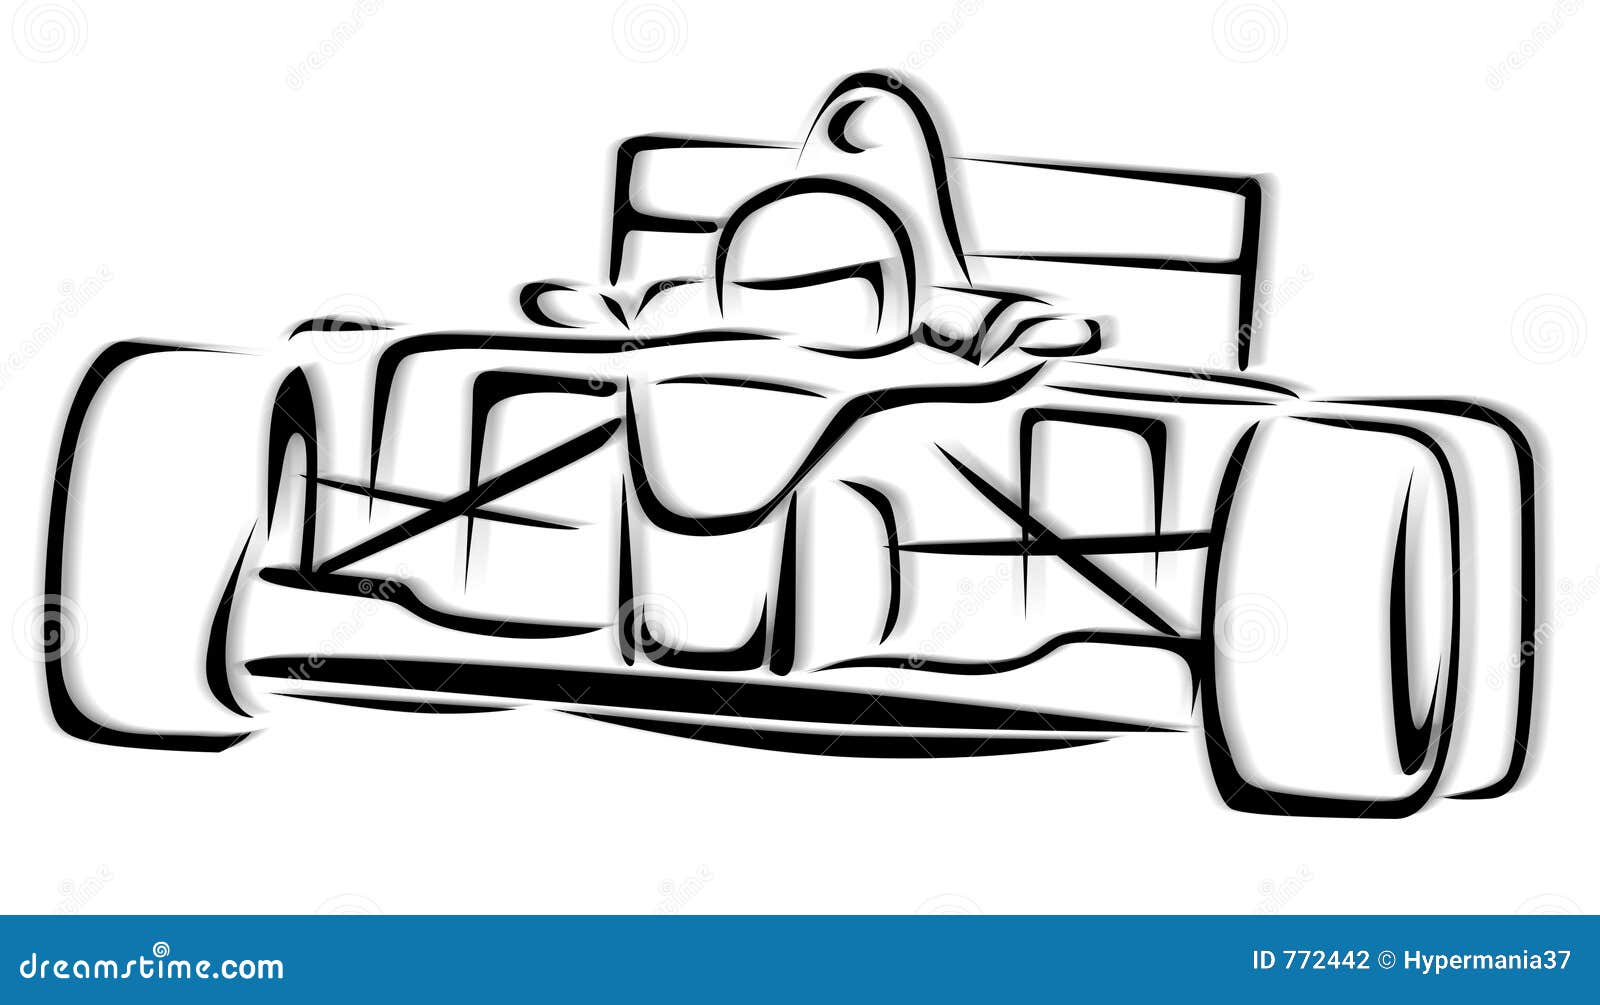 F1 Racing Car Illustration Stock Illustration Illustration Of Second 772442